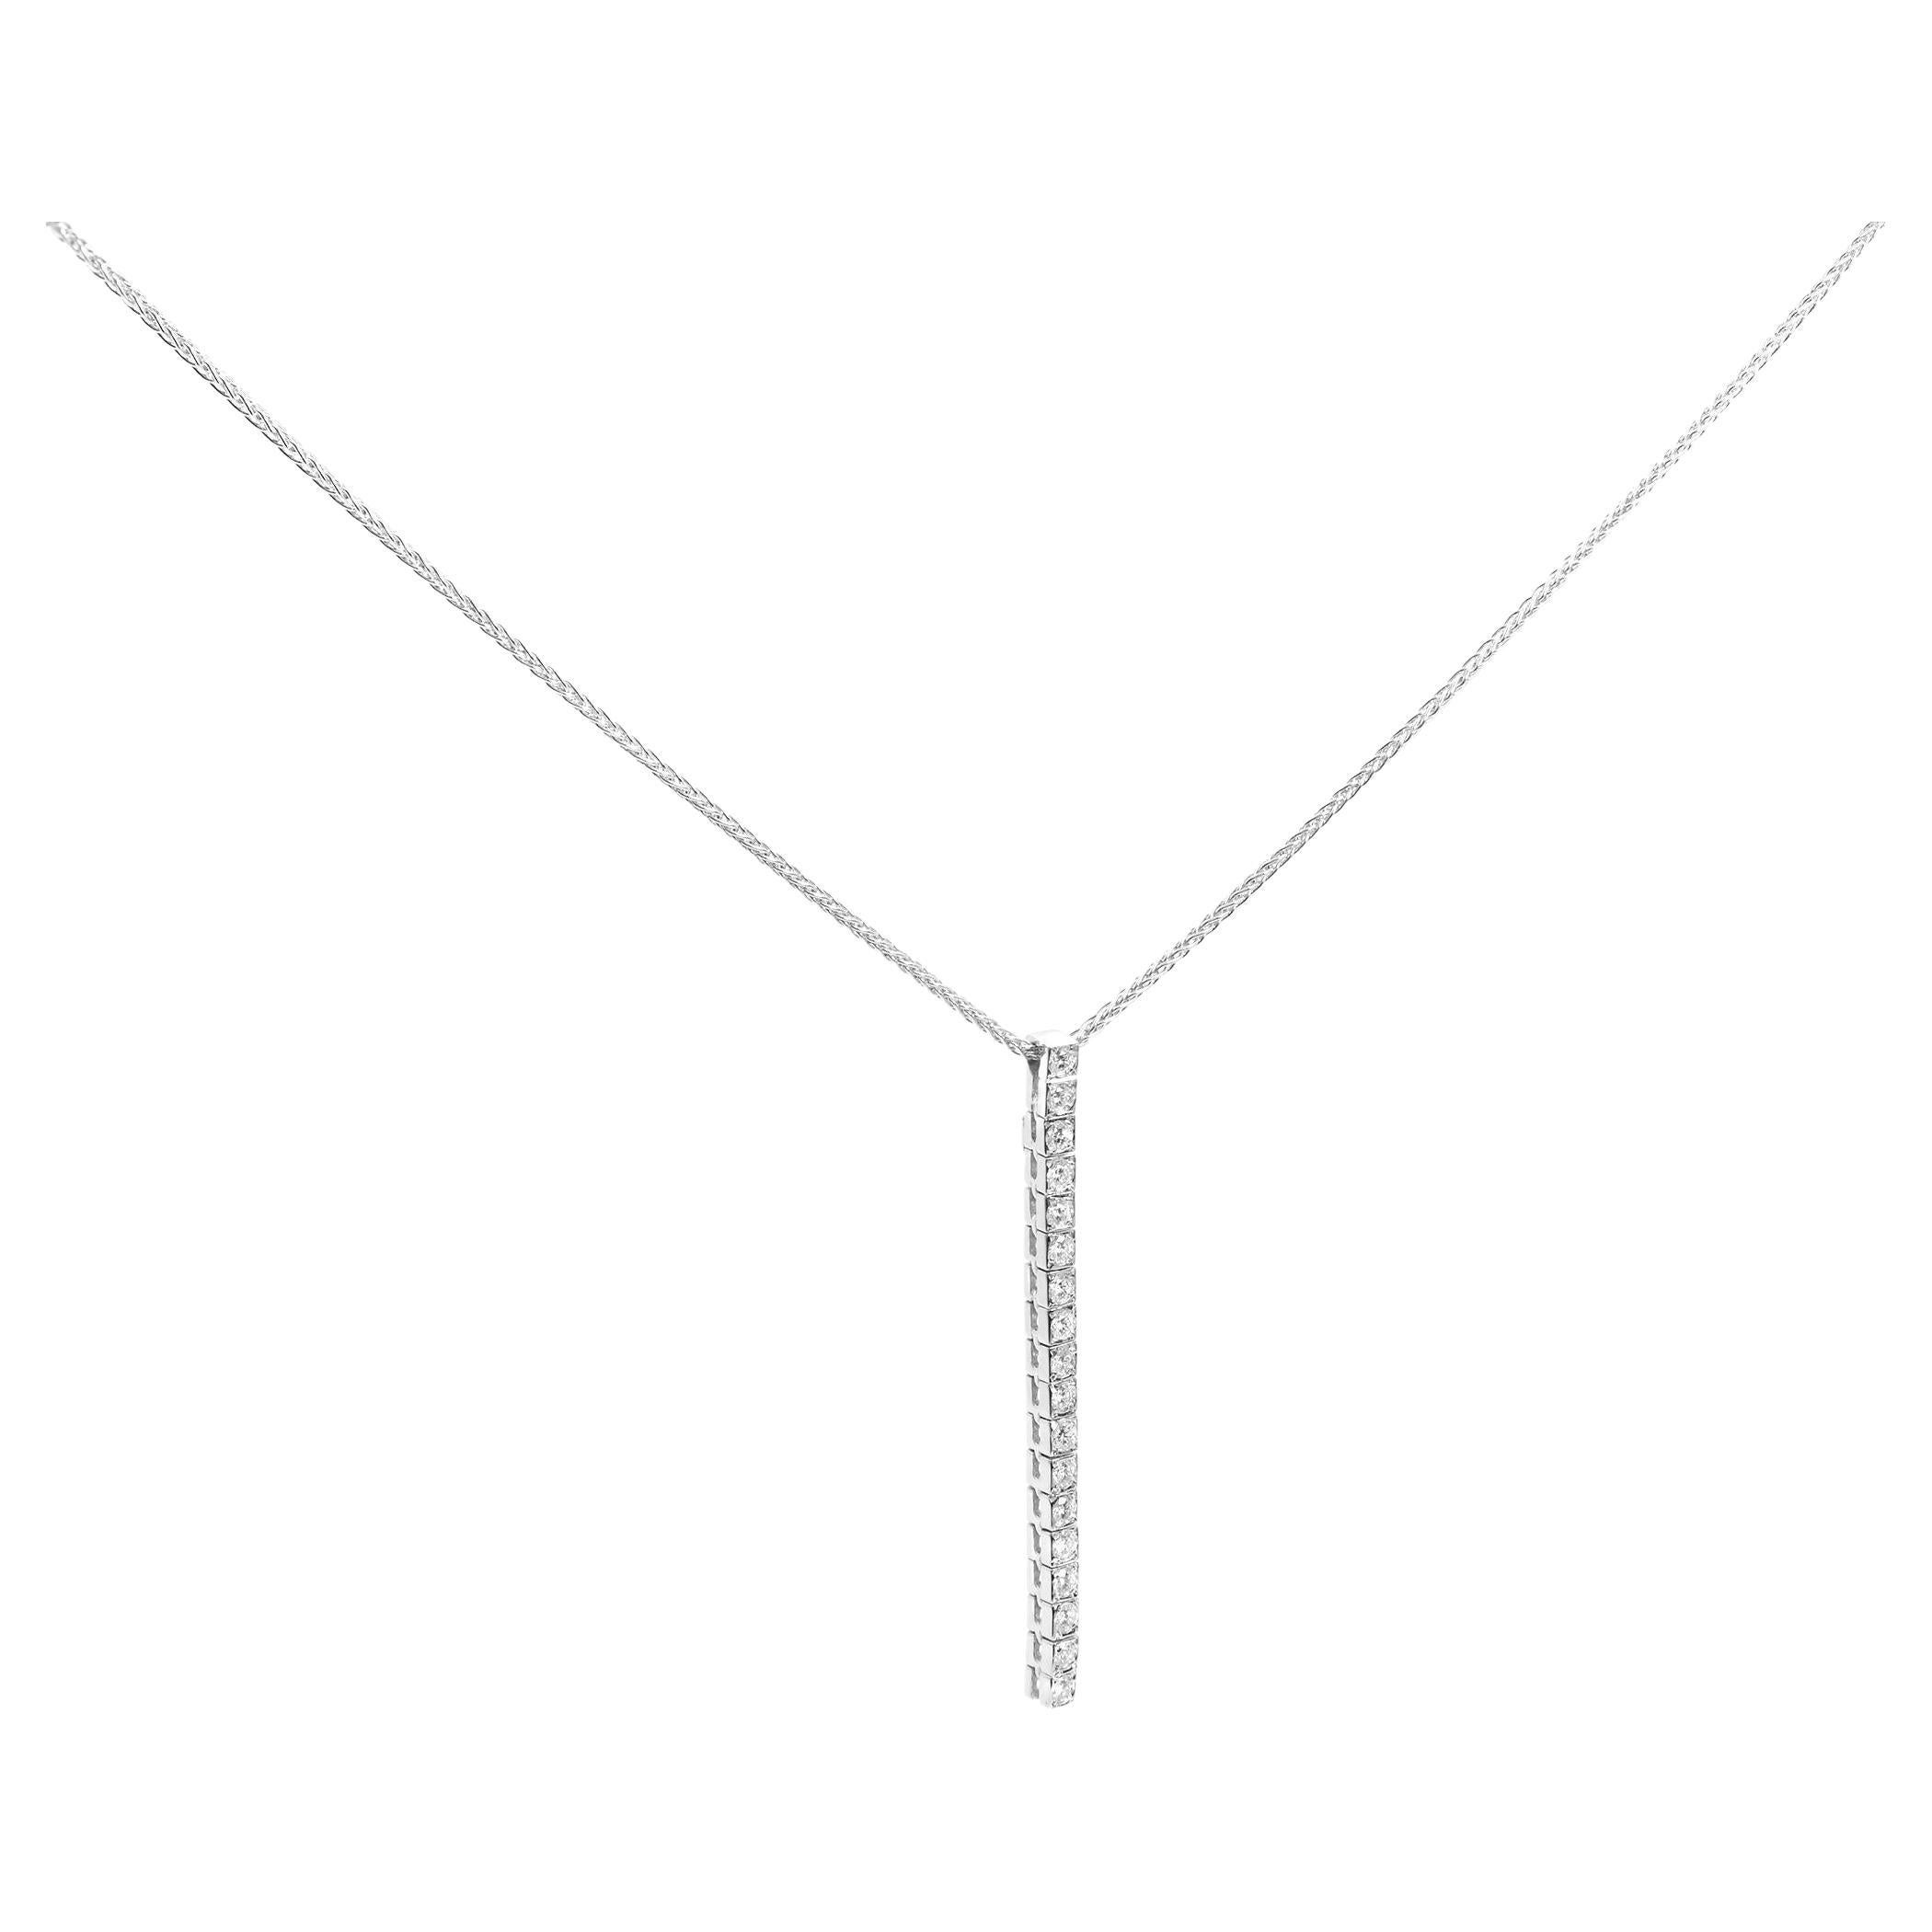 Piero Milano 1 Row Natural Diamond Drop Pendant Necklace 18k White Gold 0.40cttw For Sale